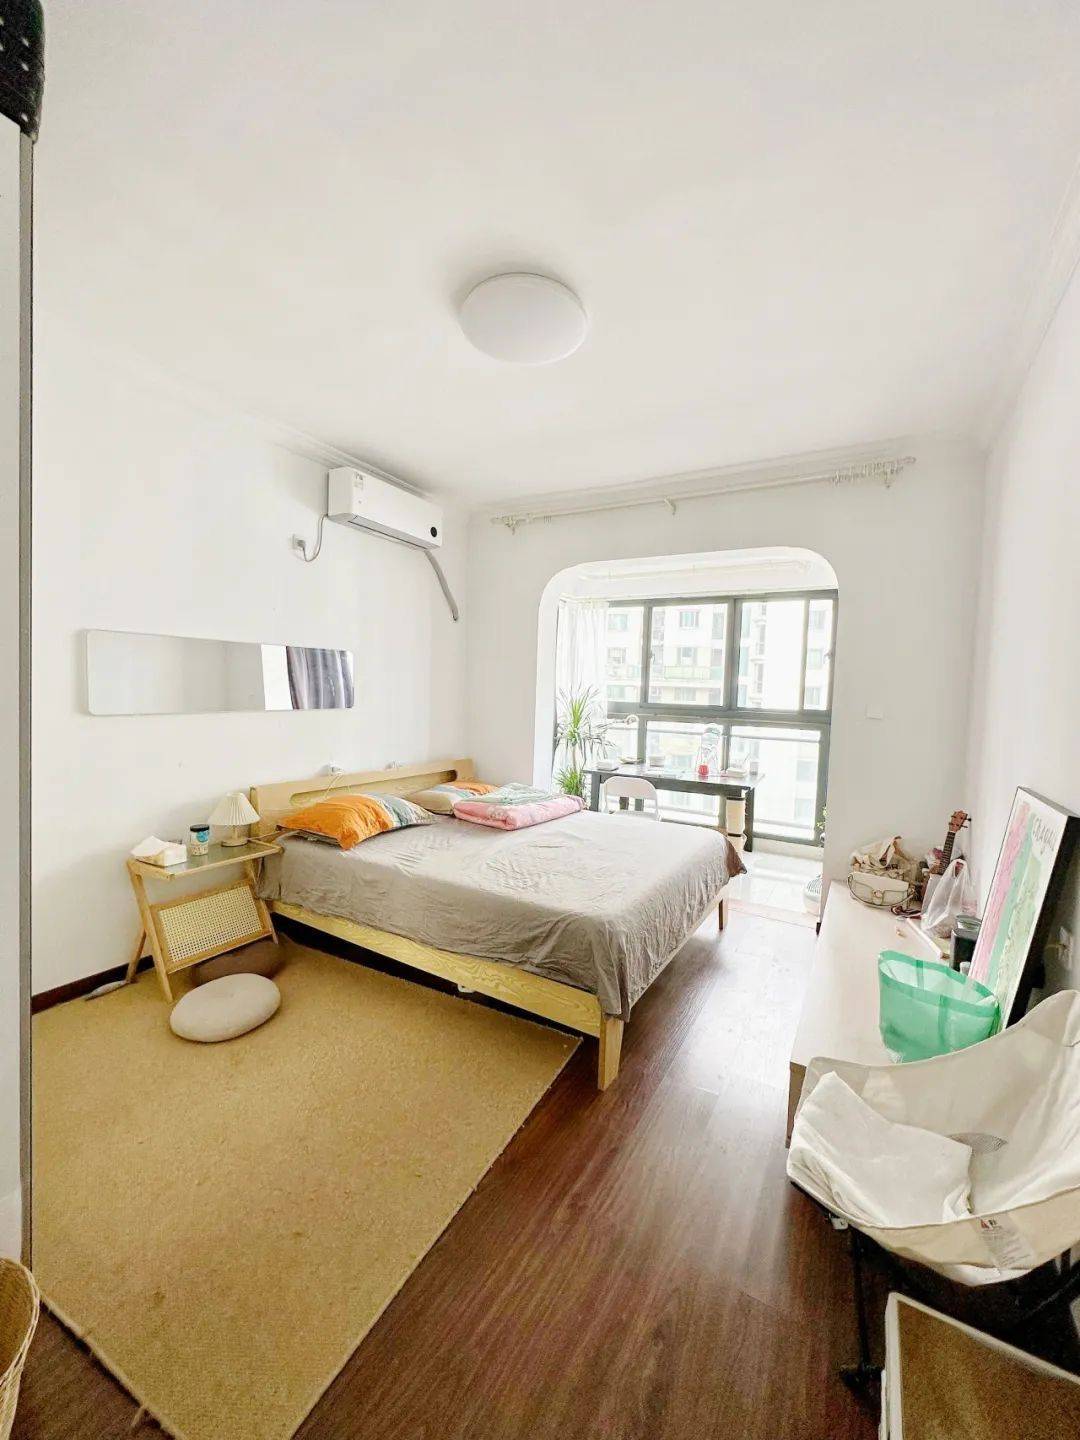 Shanghai-Putuo-Cozy Home,Clean&Comfy,No Gender Limit,LGBTQ Friendly,Pet Friendly